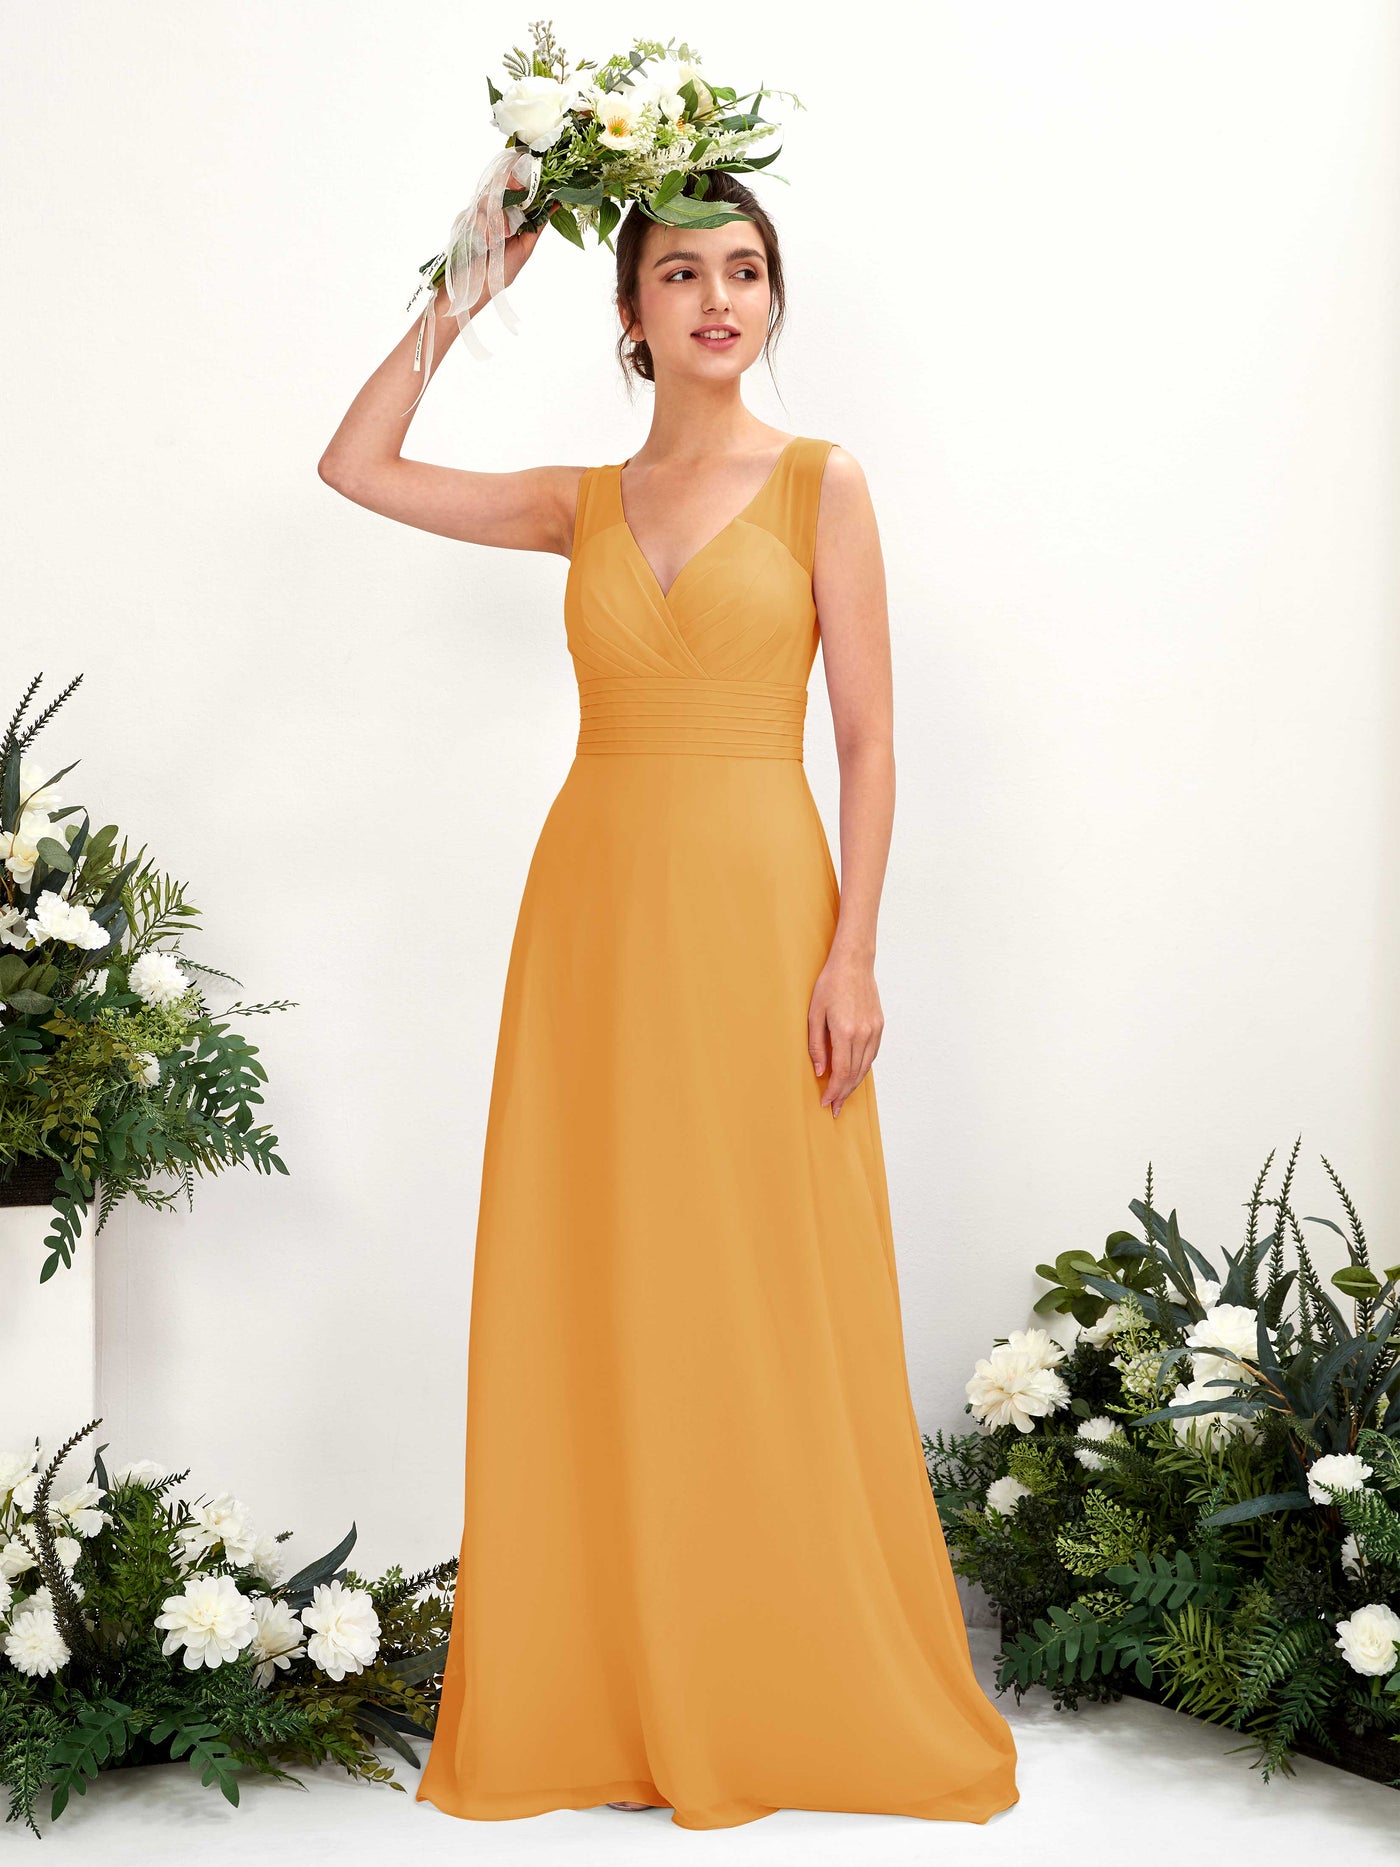 Mango Bridesmaid Dresses Bridesmaid Dress A-line Chiffon Straps Full Length Sleeveless Wedding Party Dress (81220902)#color_mango